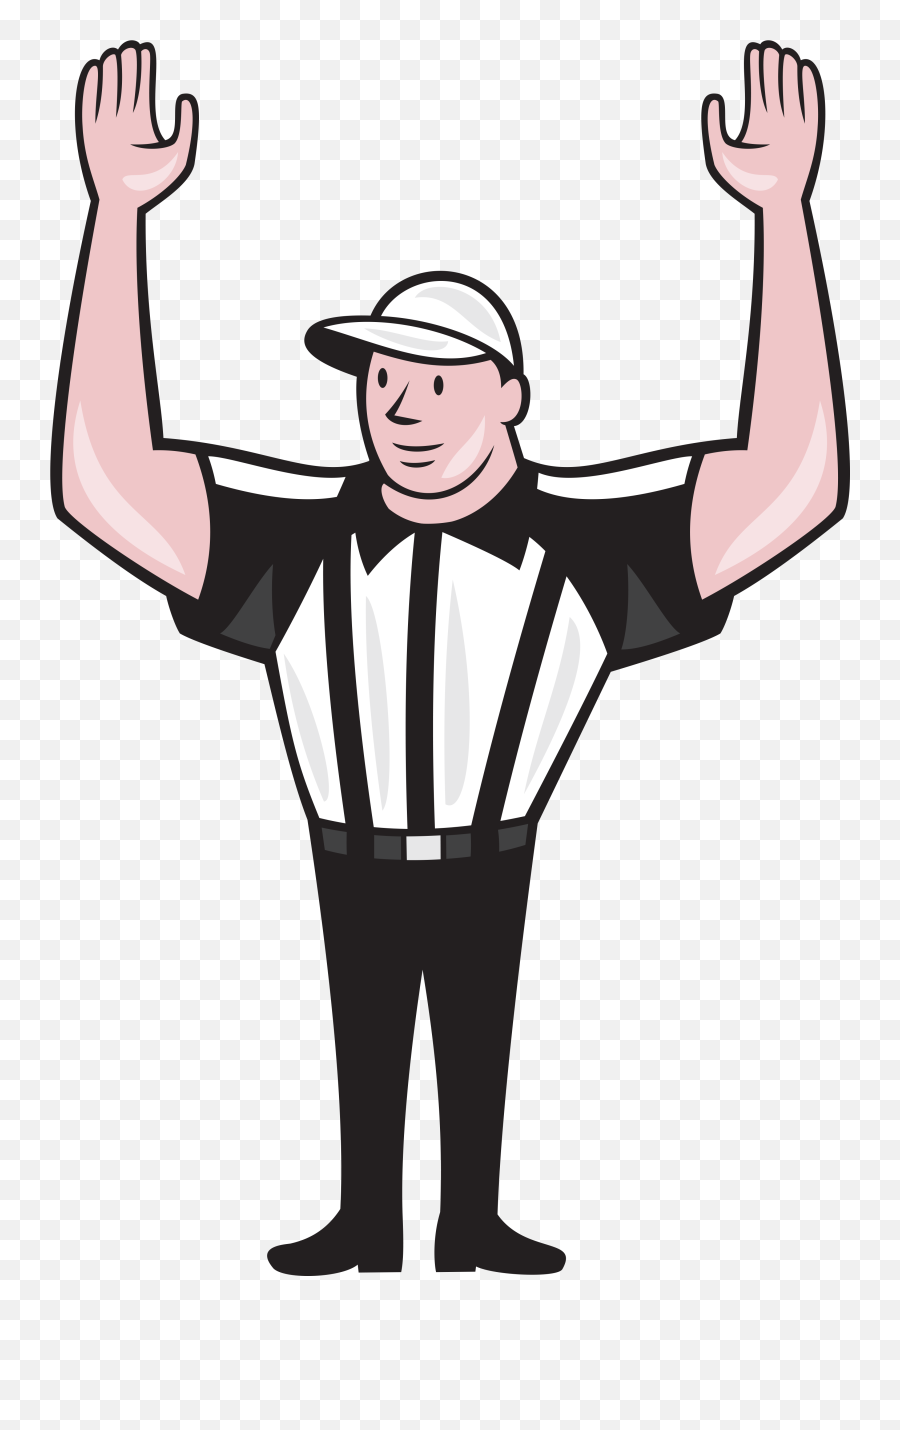 Football Referee Png 7 Image - Cartoon Referee Png,Referee Png